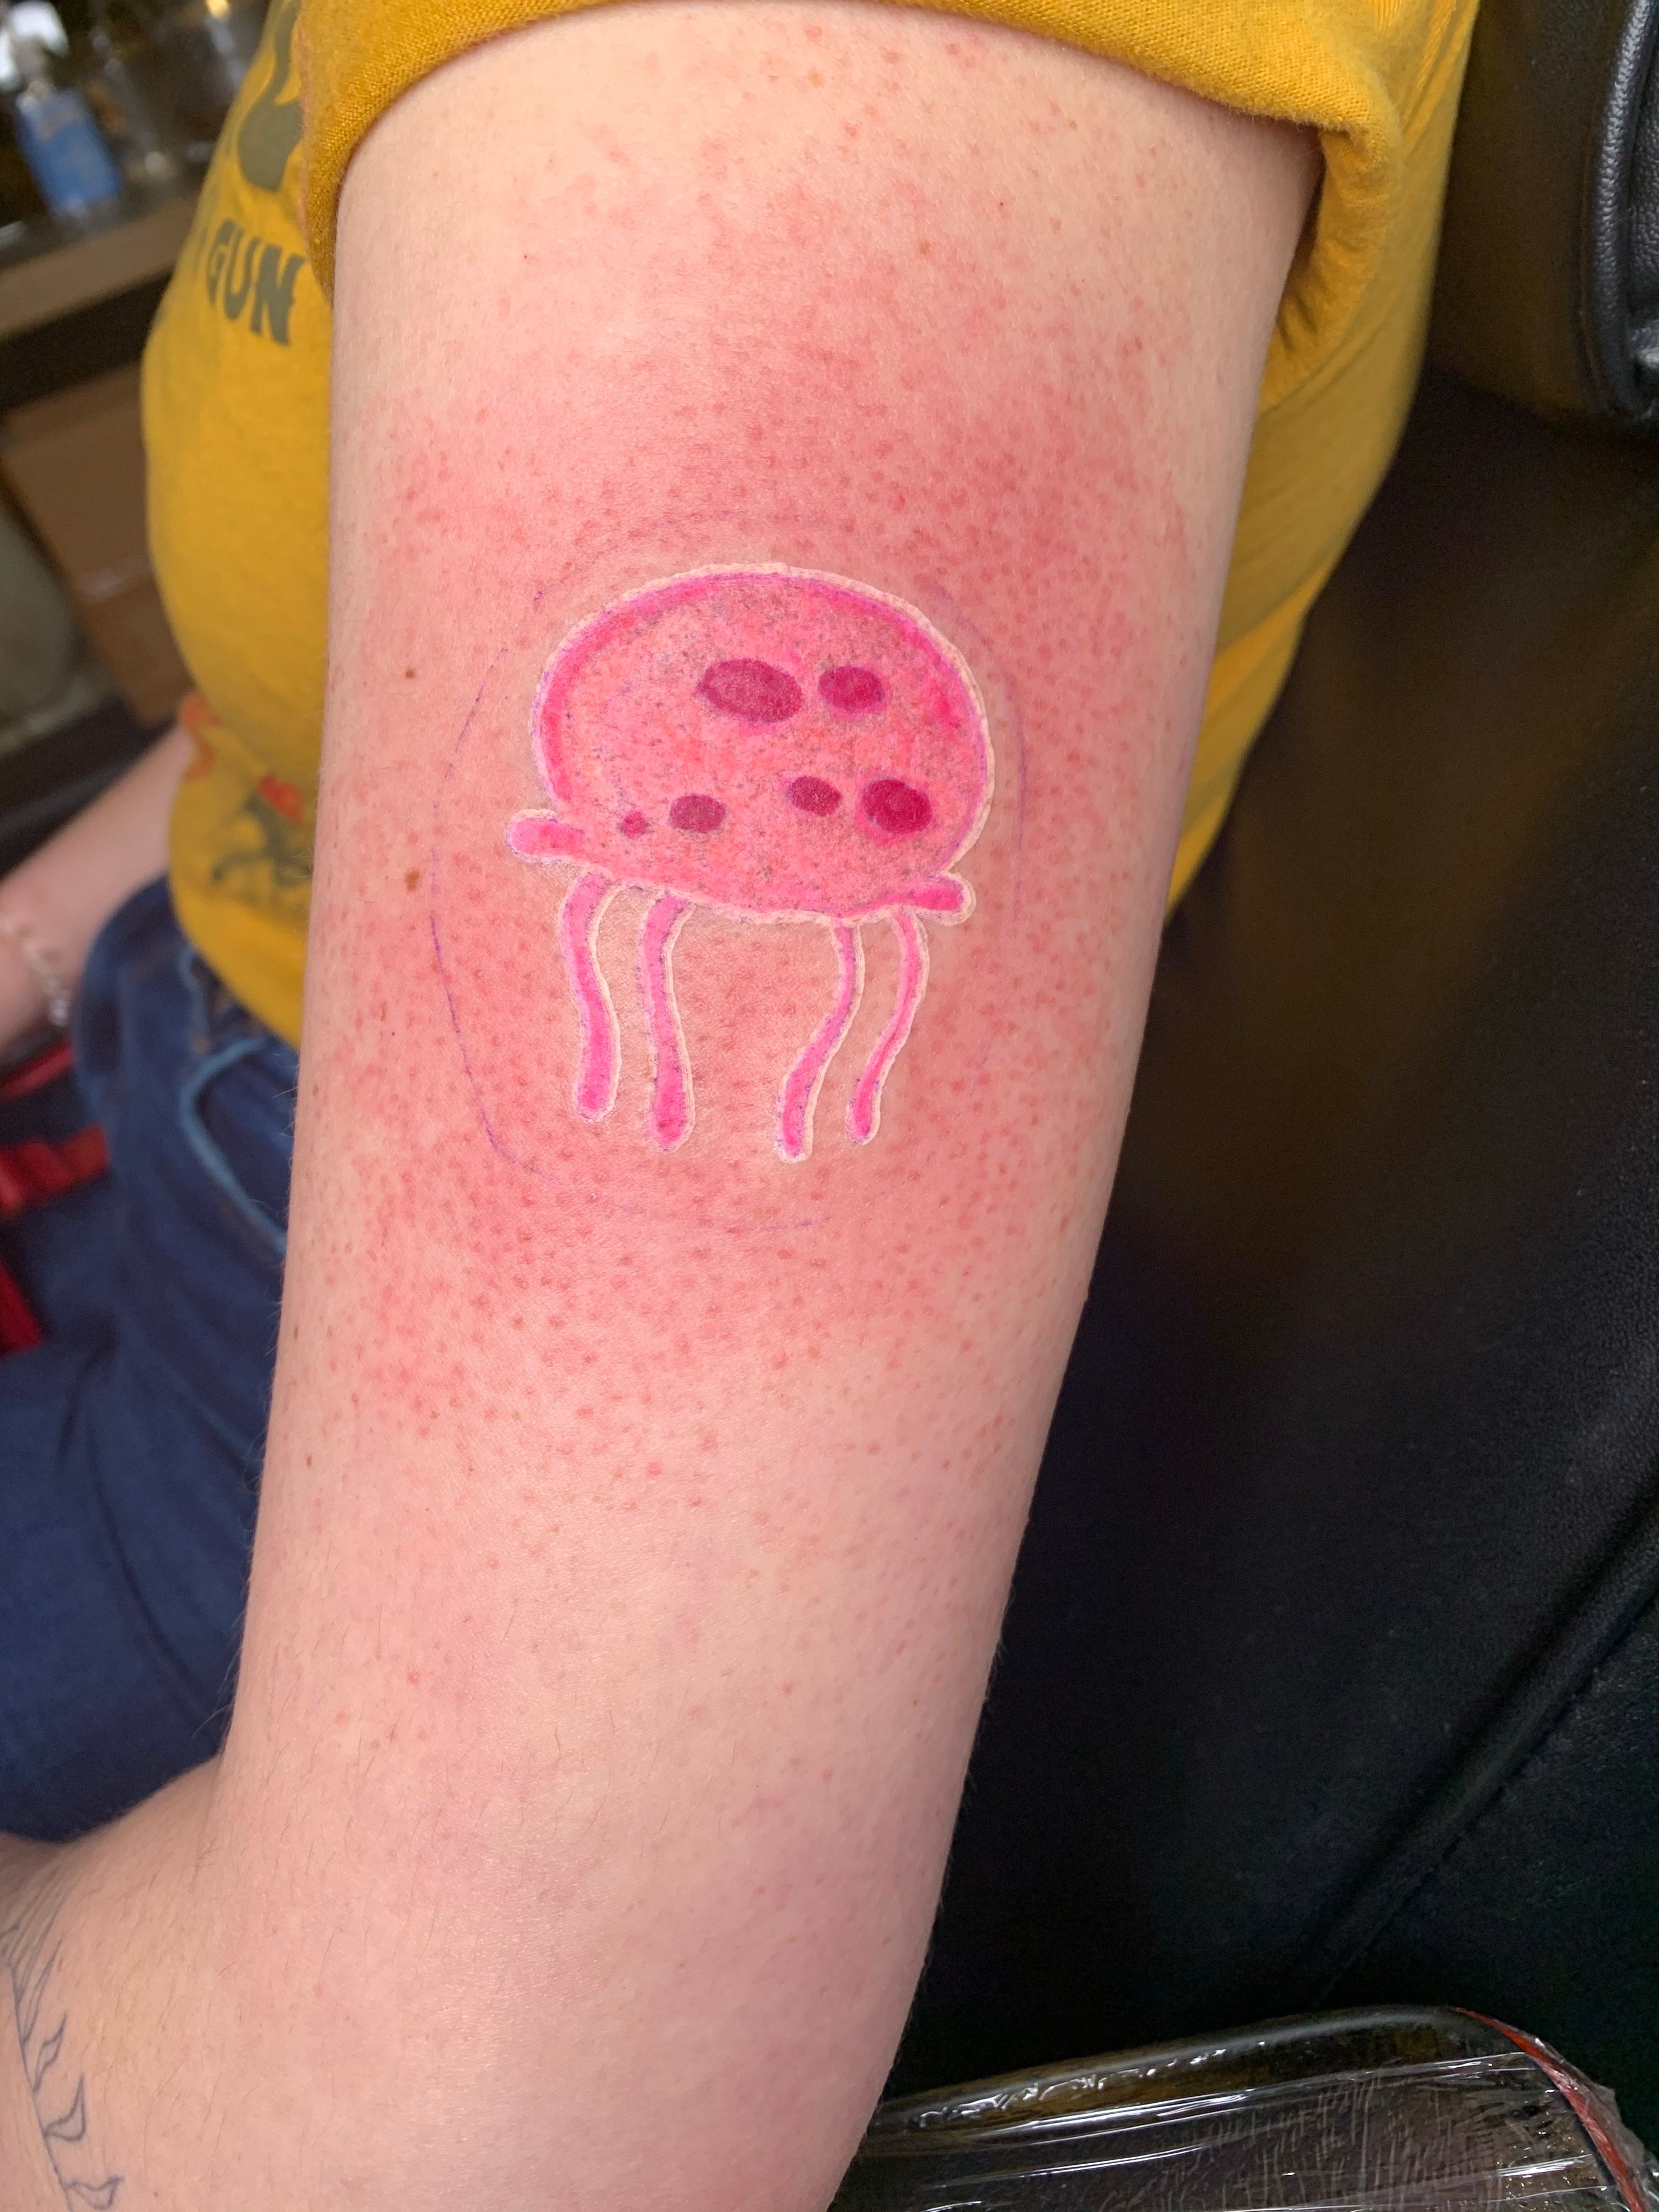 Tattoo uploaded by Brittany Brutal • Sponge-bob jellyfish tattoo